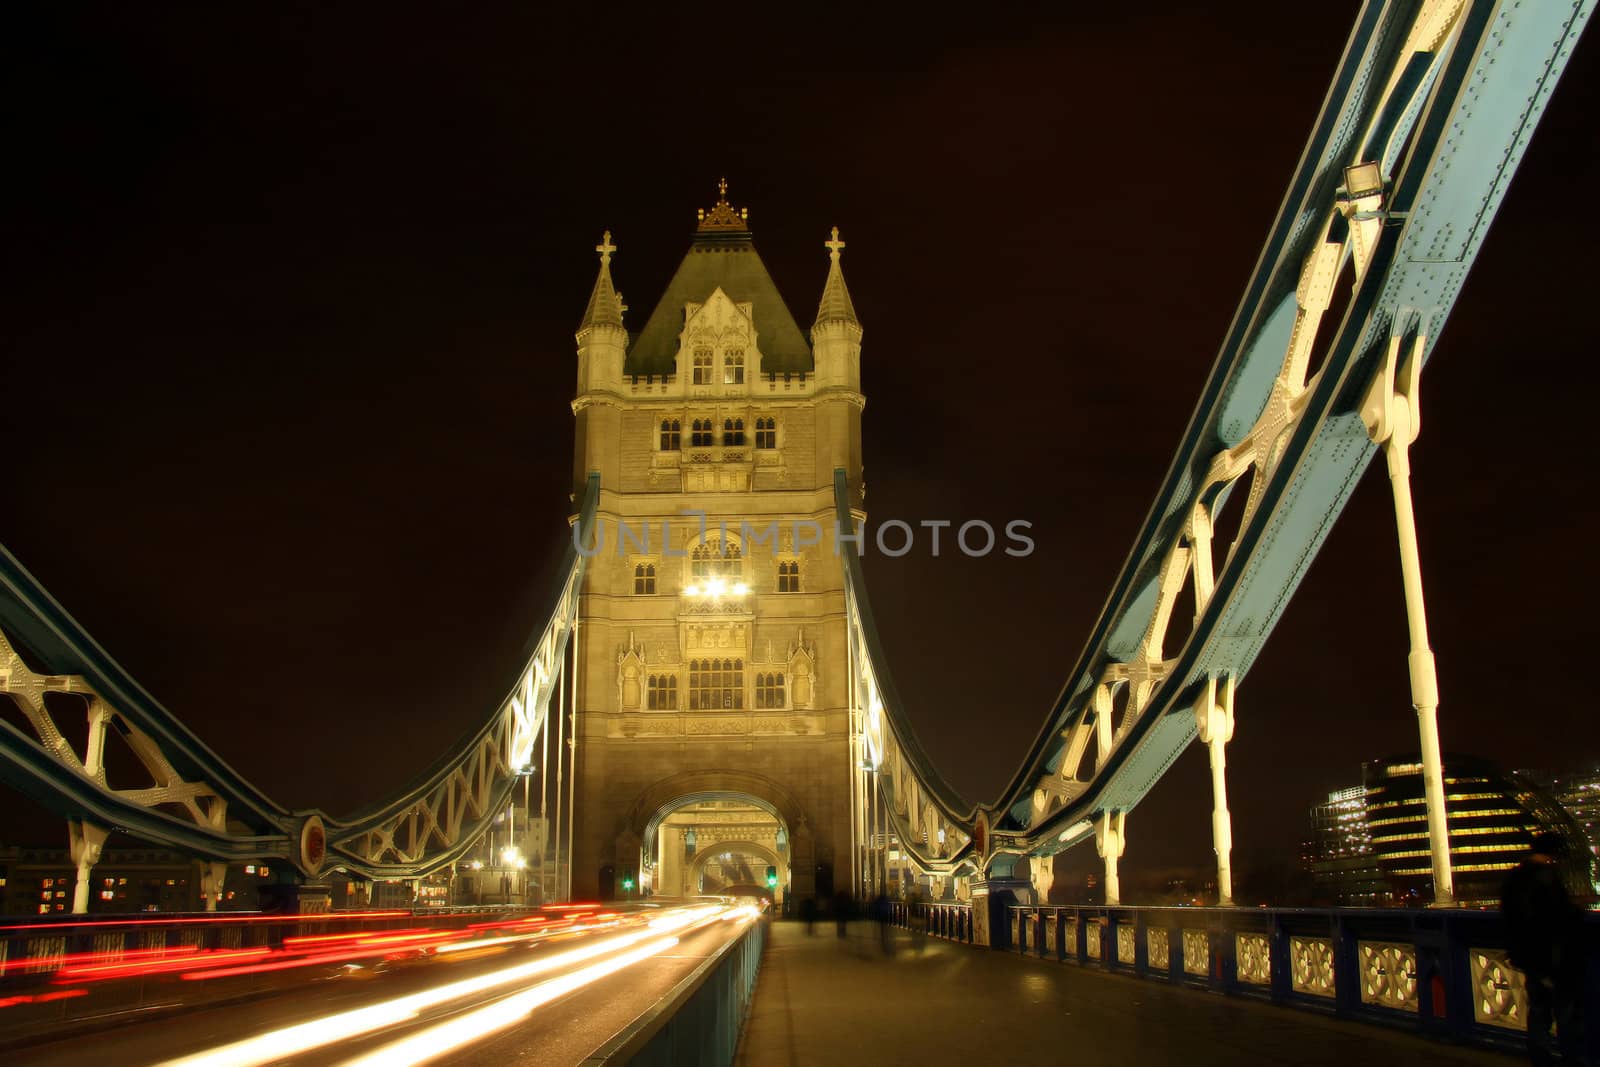 Tower Bridge   London  U.K.
Low Light Photography   (LLP)